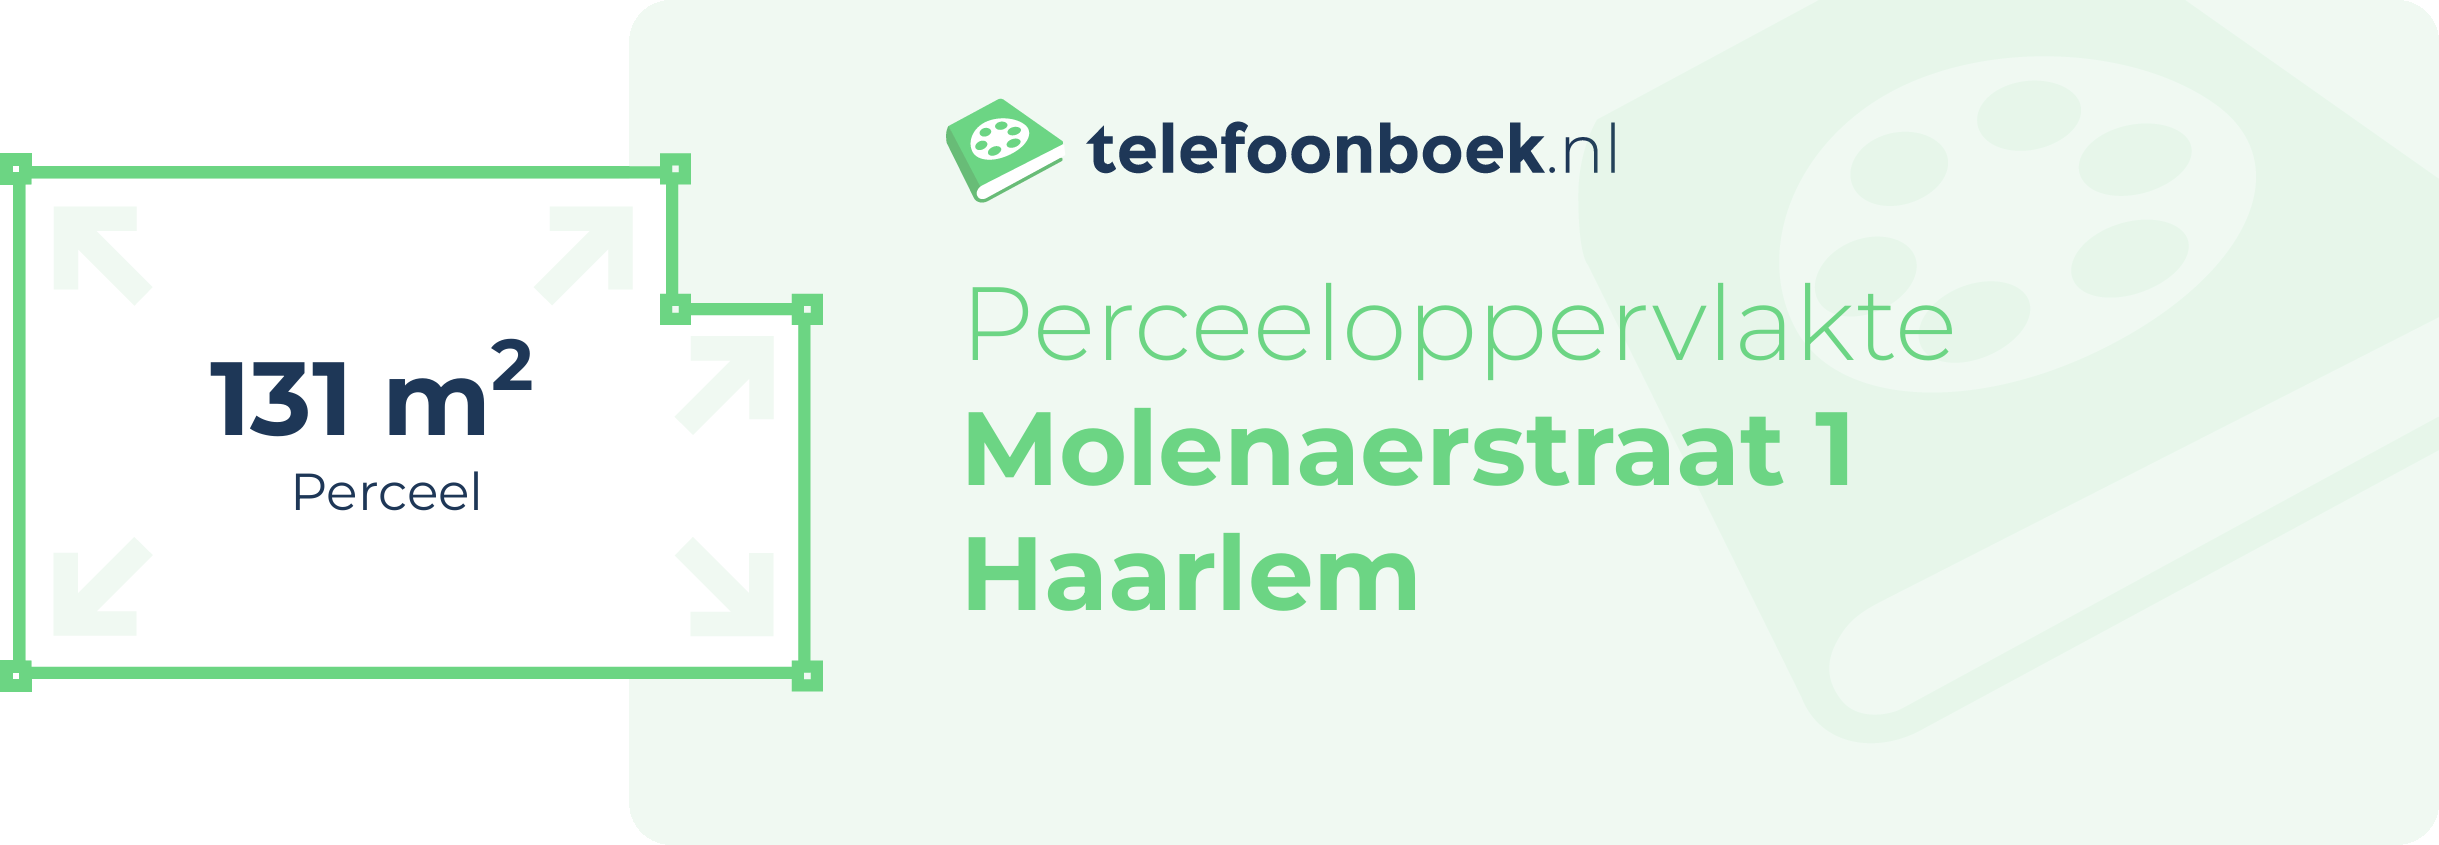 Perceeloppervlakte Molenaerstraat 1 Haarlem